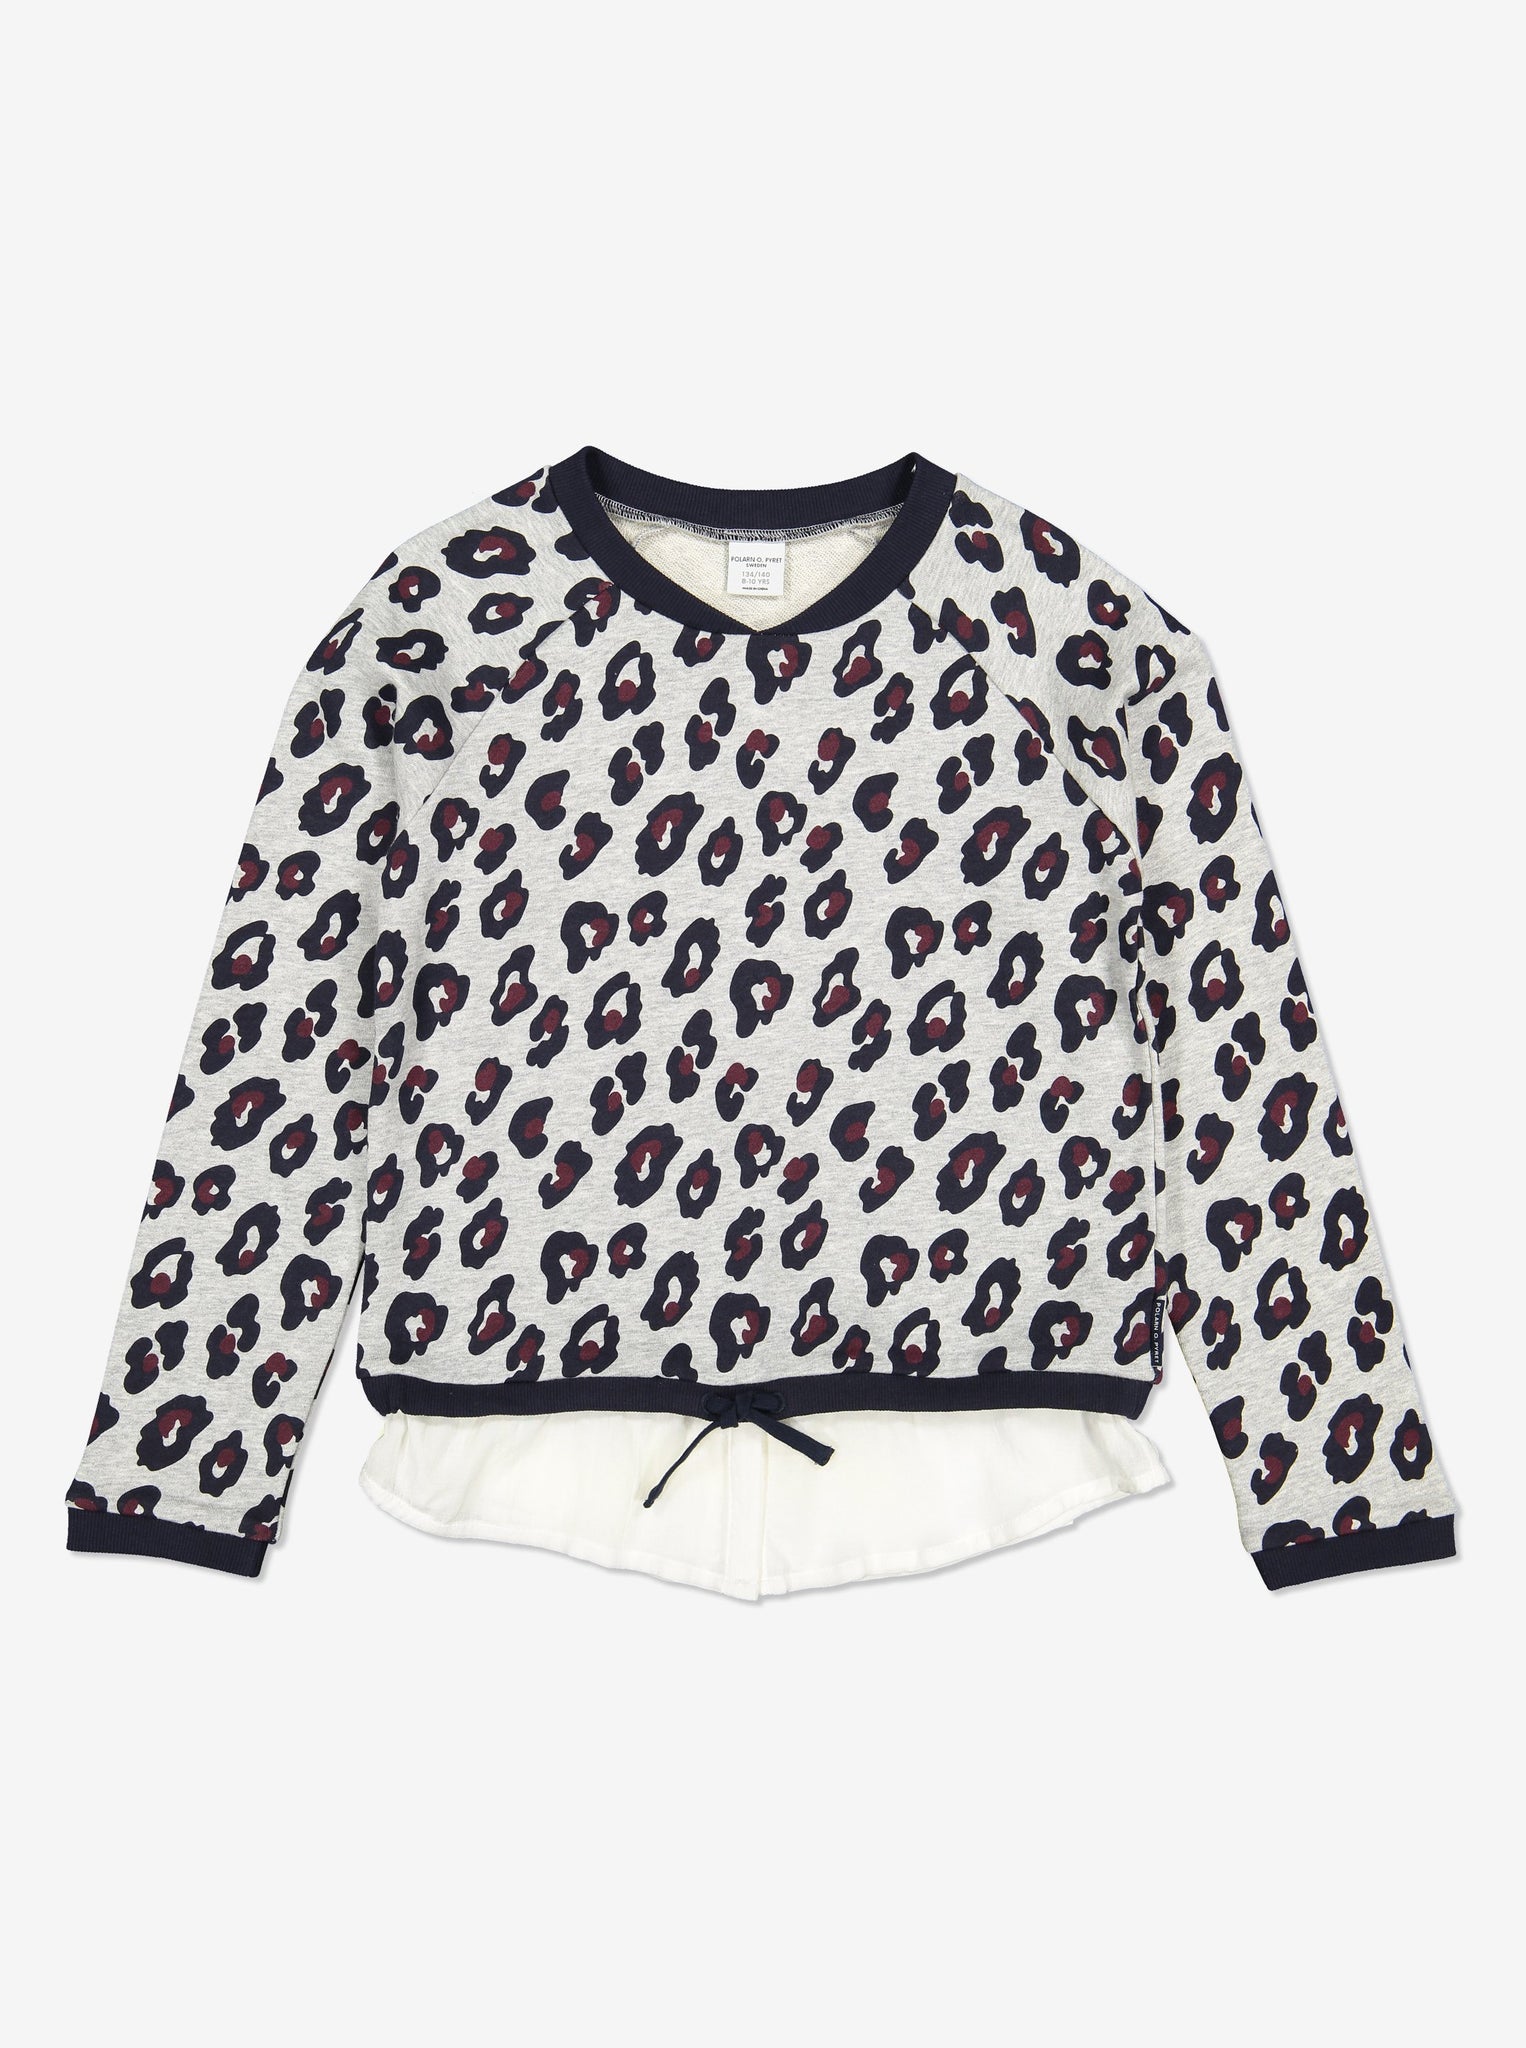 Leopard Print Kids Sweatshirt-Unisex-6-12y-Navy